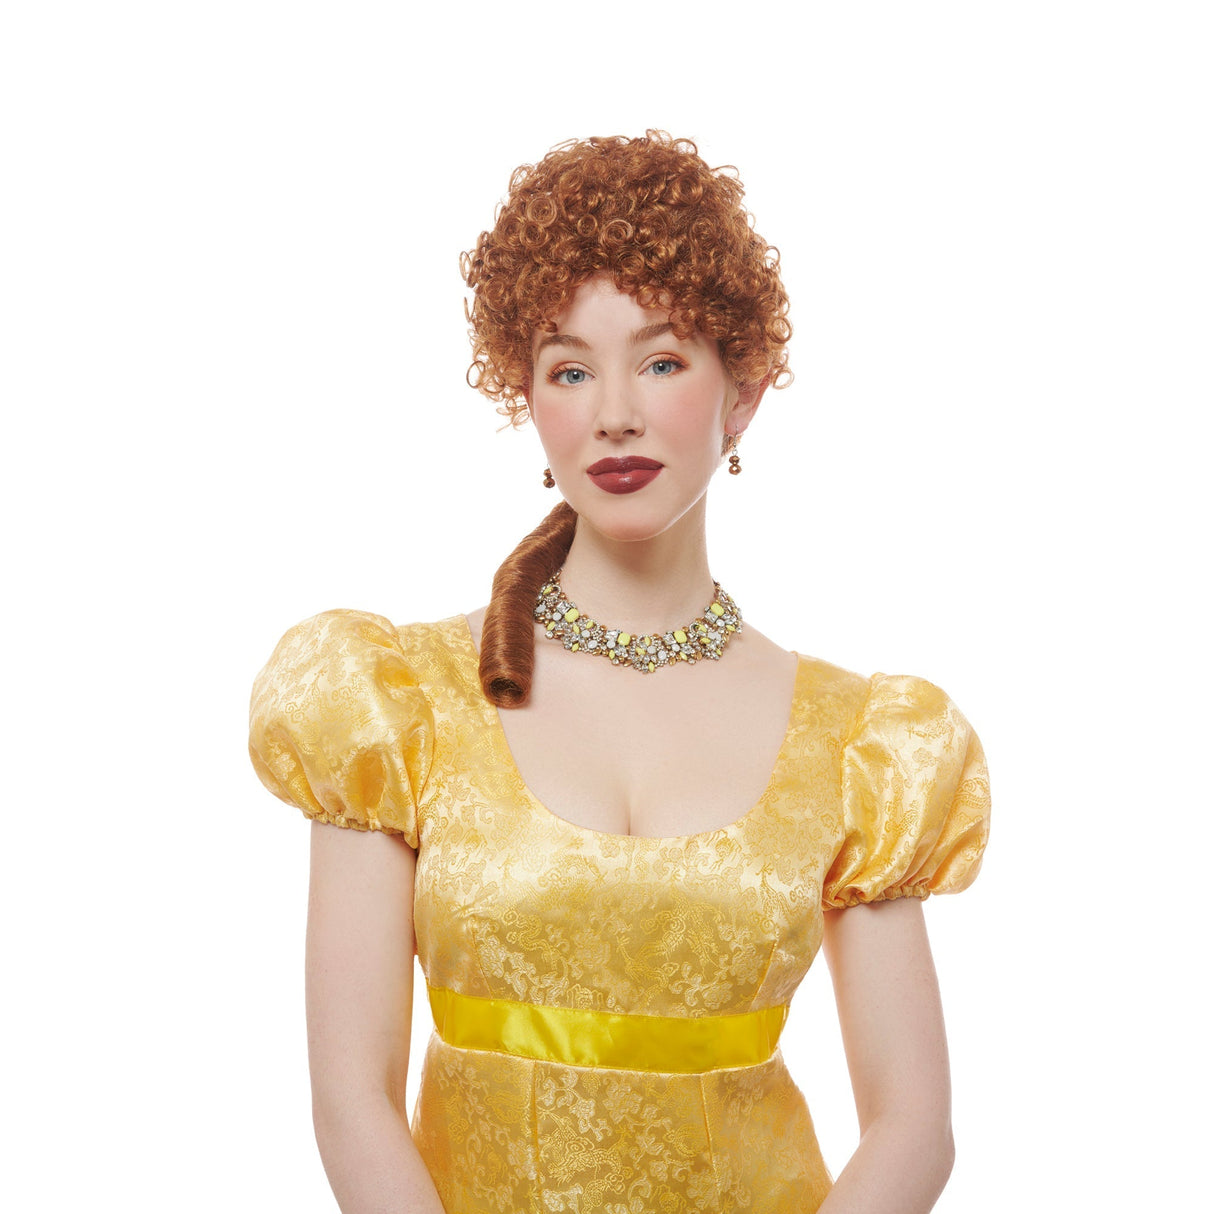 COSTUME CULTURE BY FRANCO Costume Accessories Regency Debutante Wig for Adults, Bridgerton 091346249888